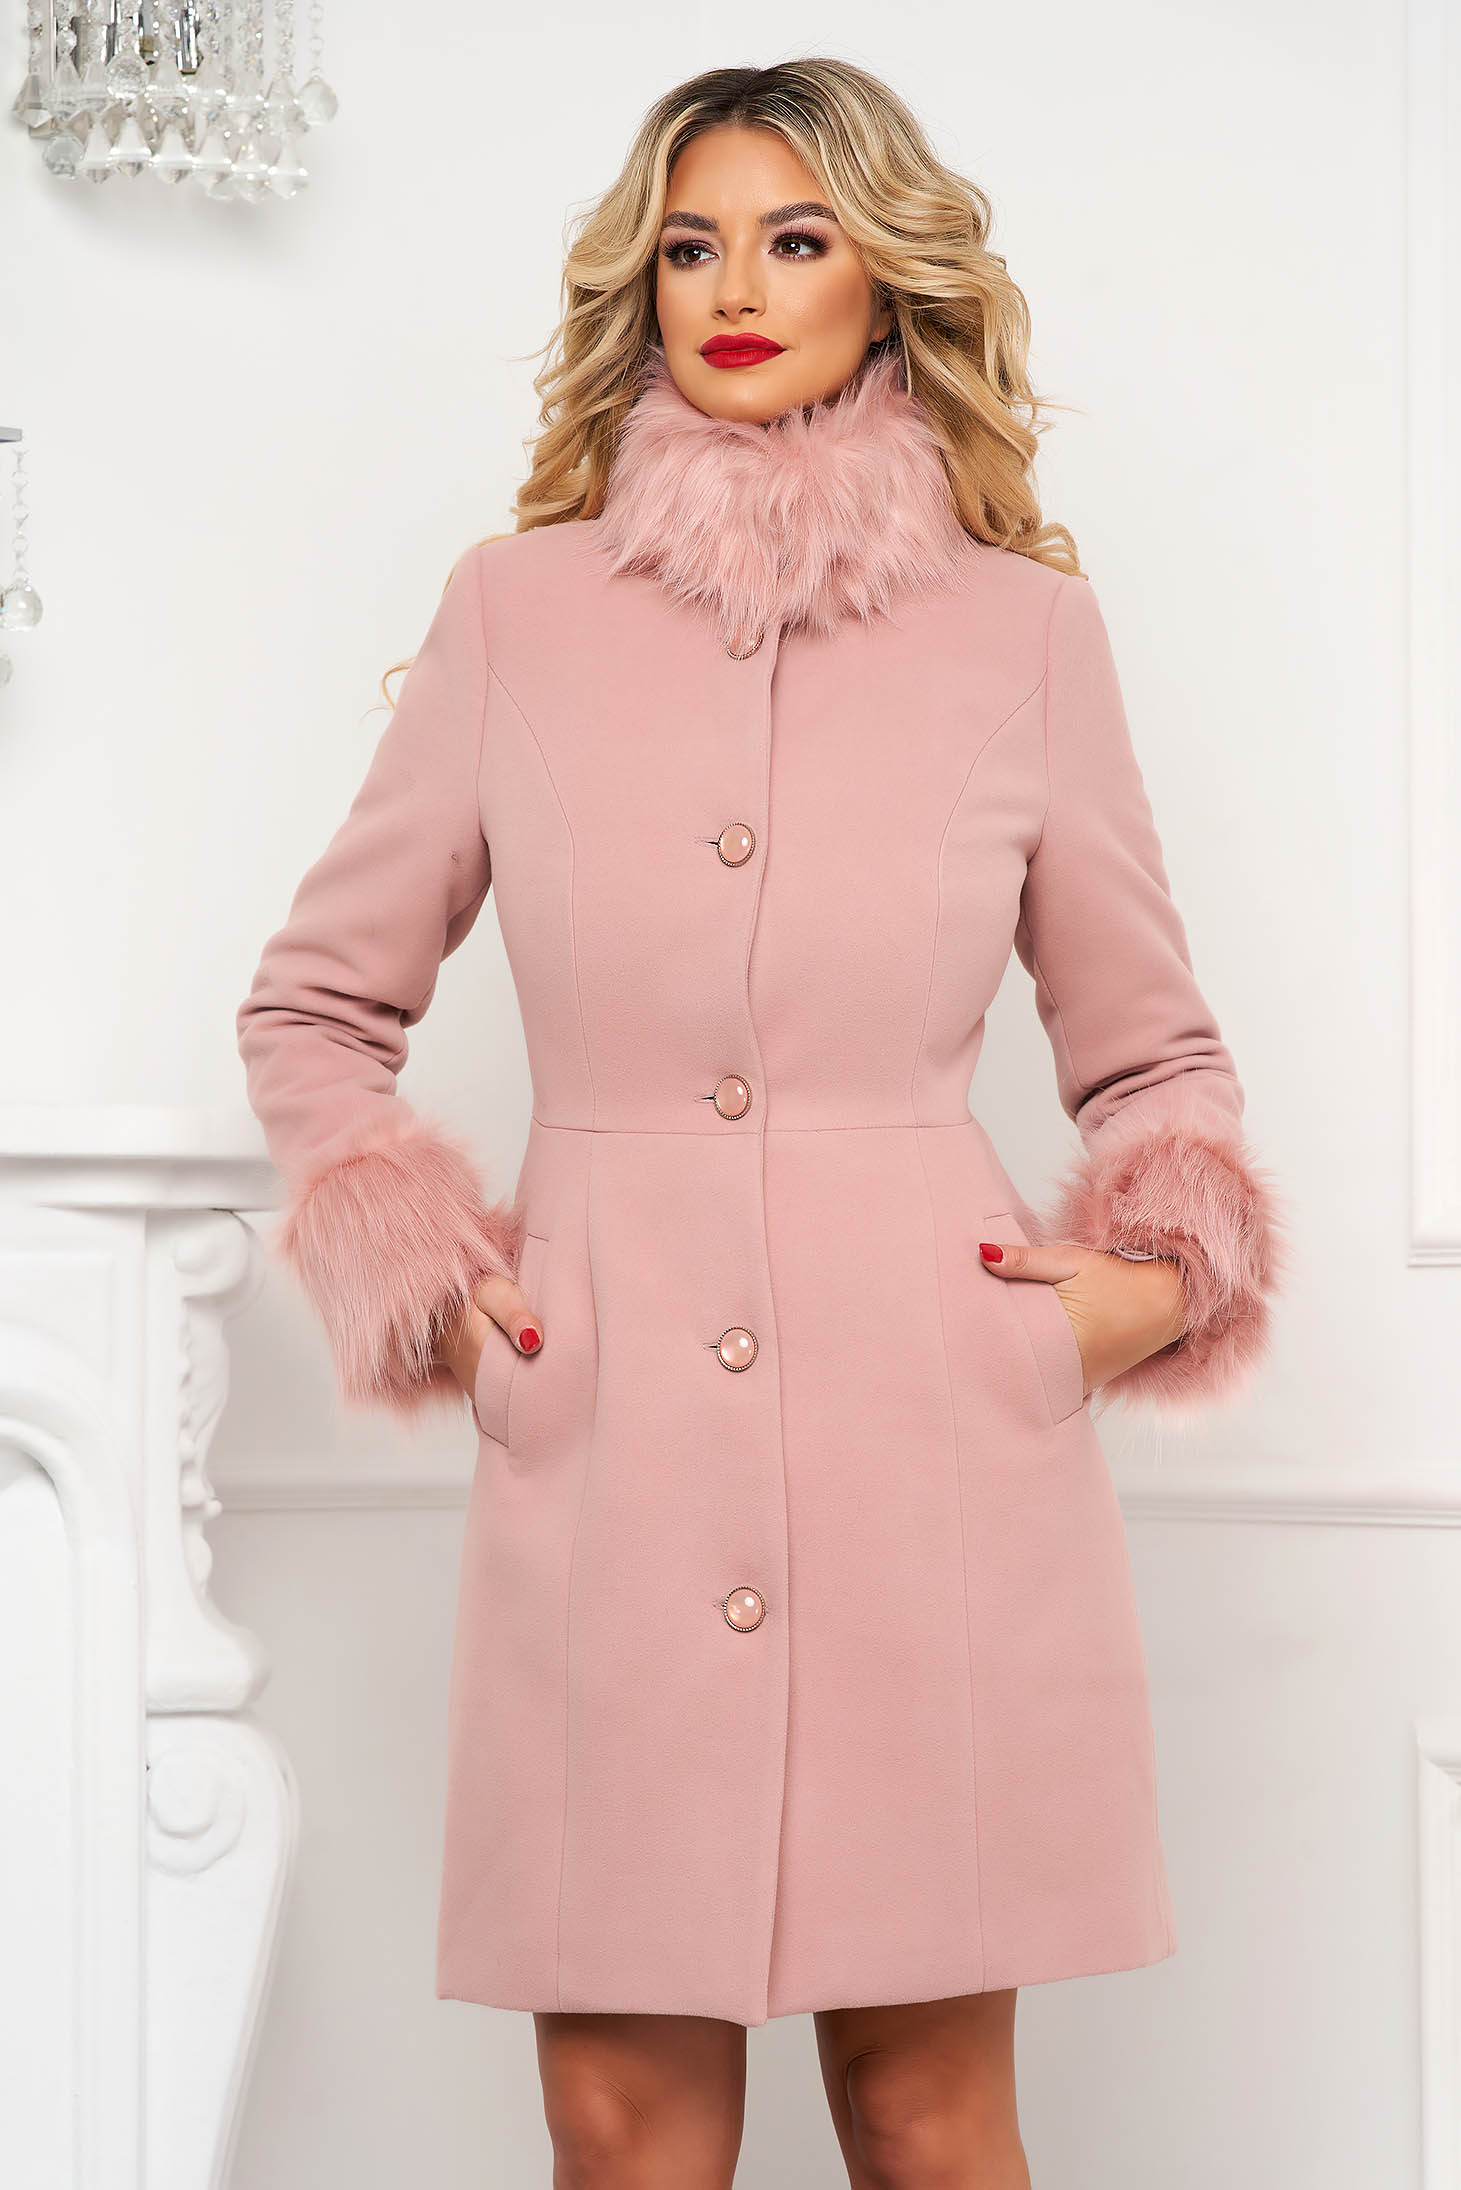 Palton Artista roz prafuit cambrat elegant cu guler si mansete cu blana